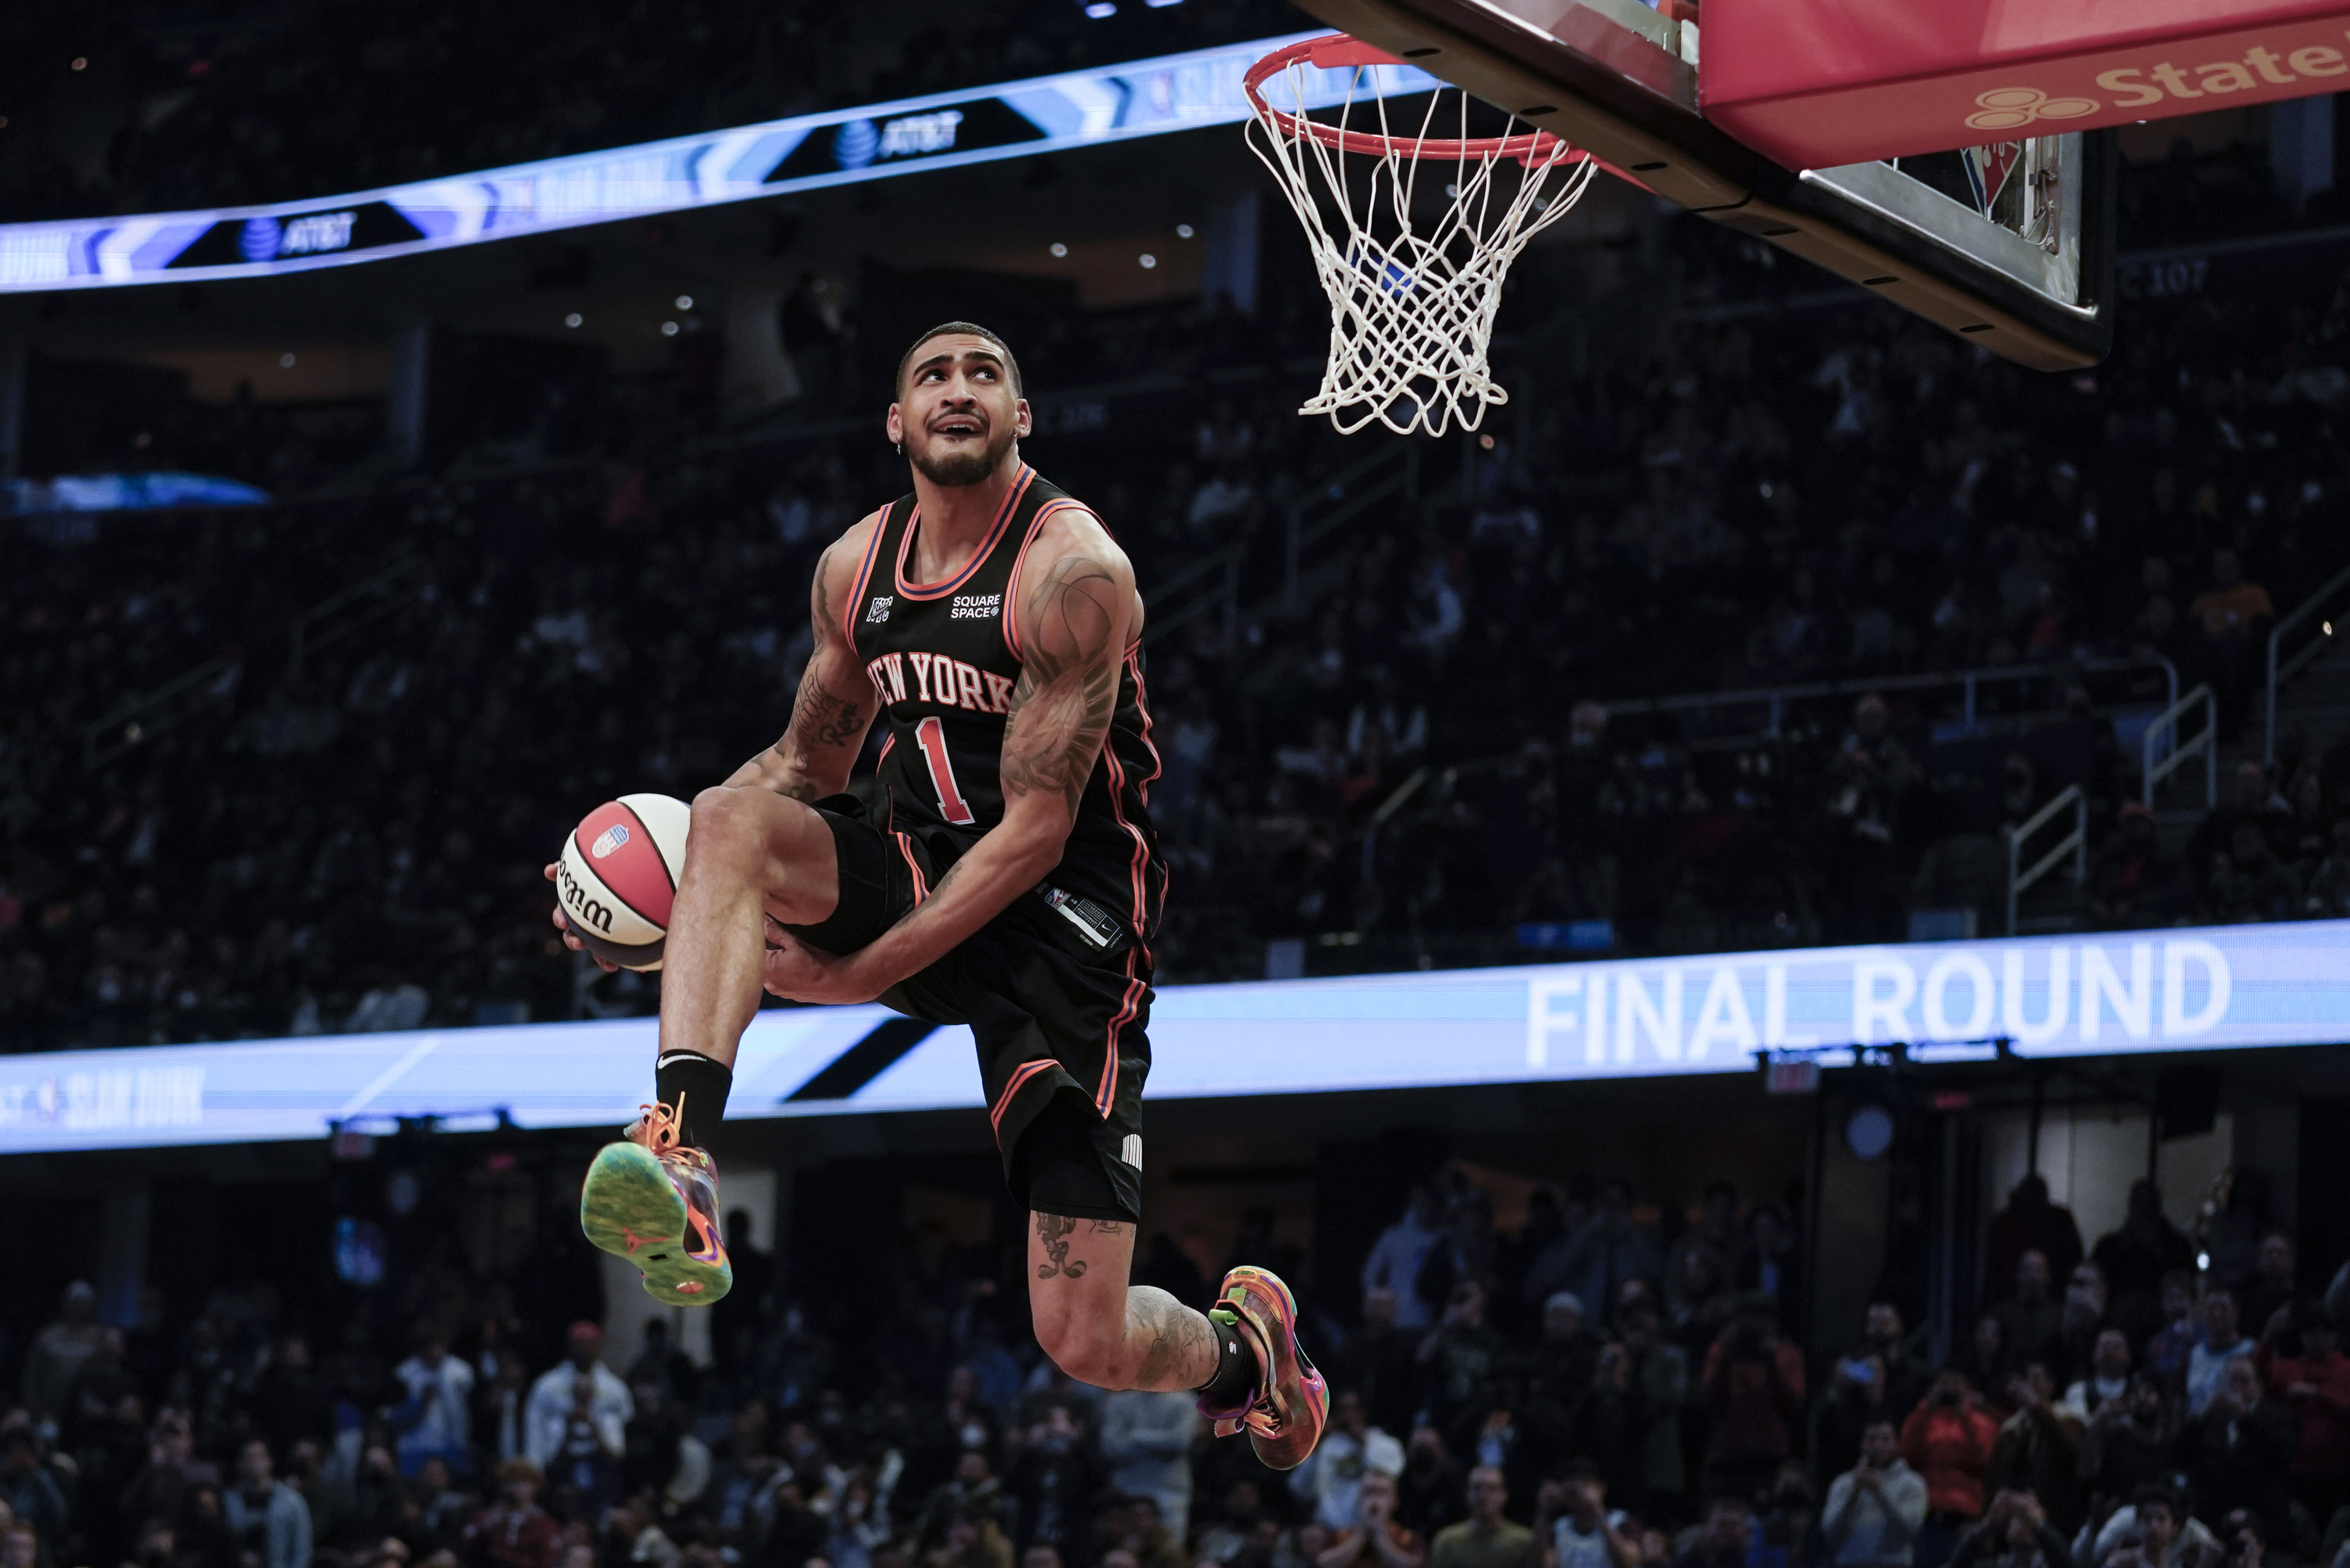 Obi Toppin wins NBA slam dunk contest. Should format change?